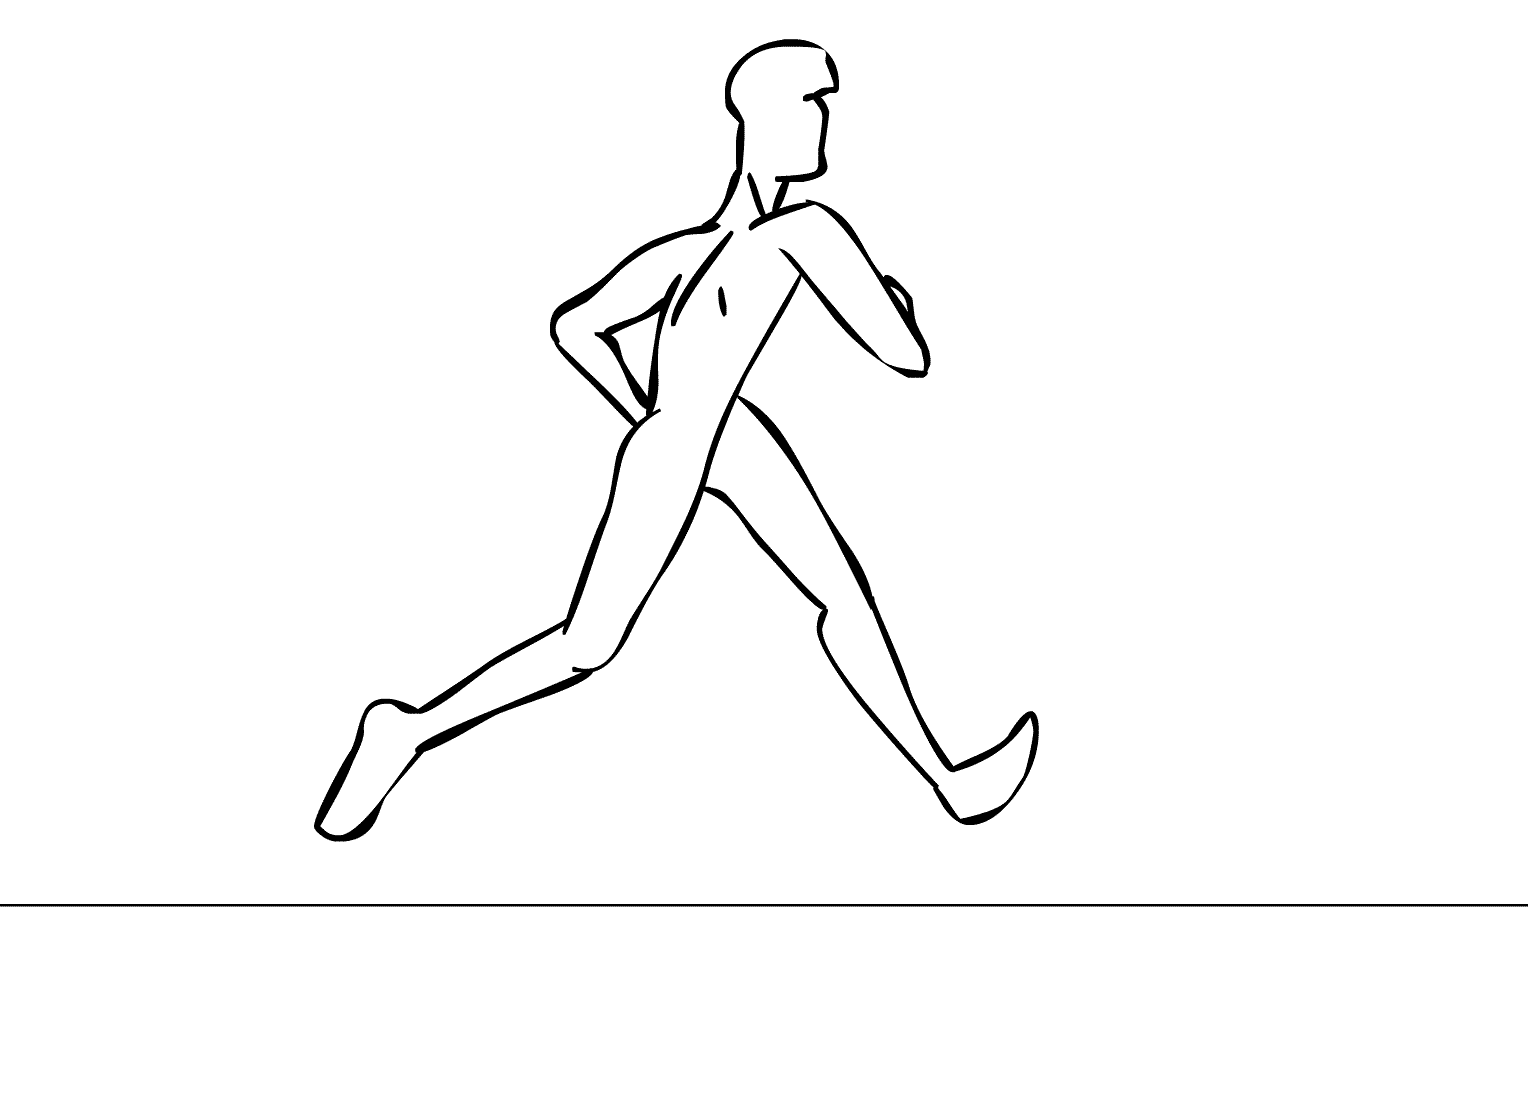 ... running animated gif running away animated gif man running animated